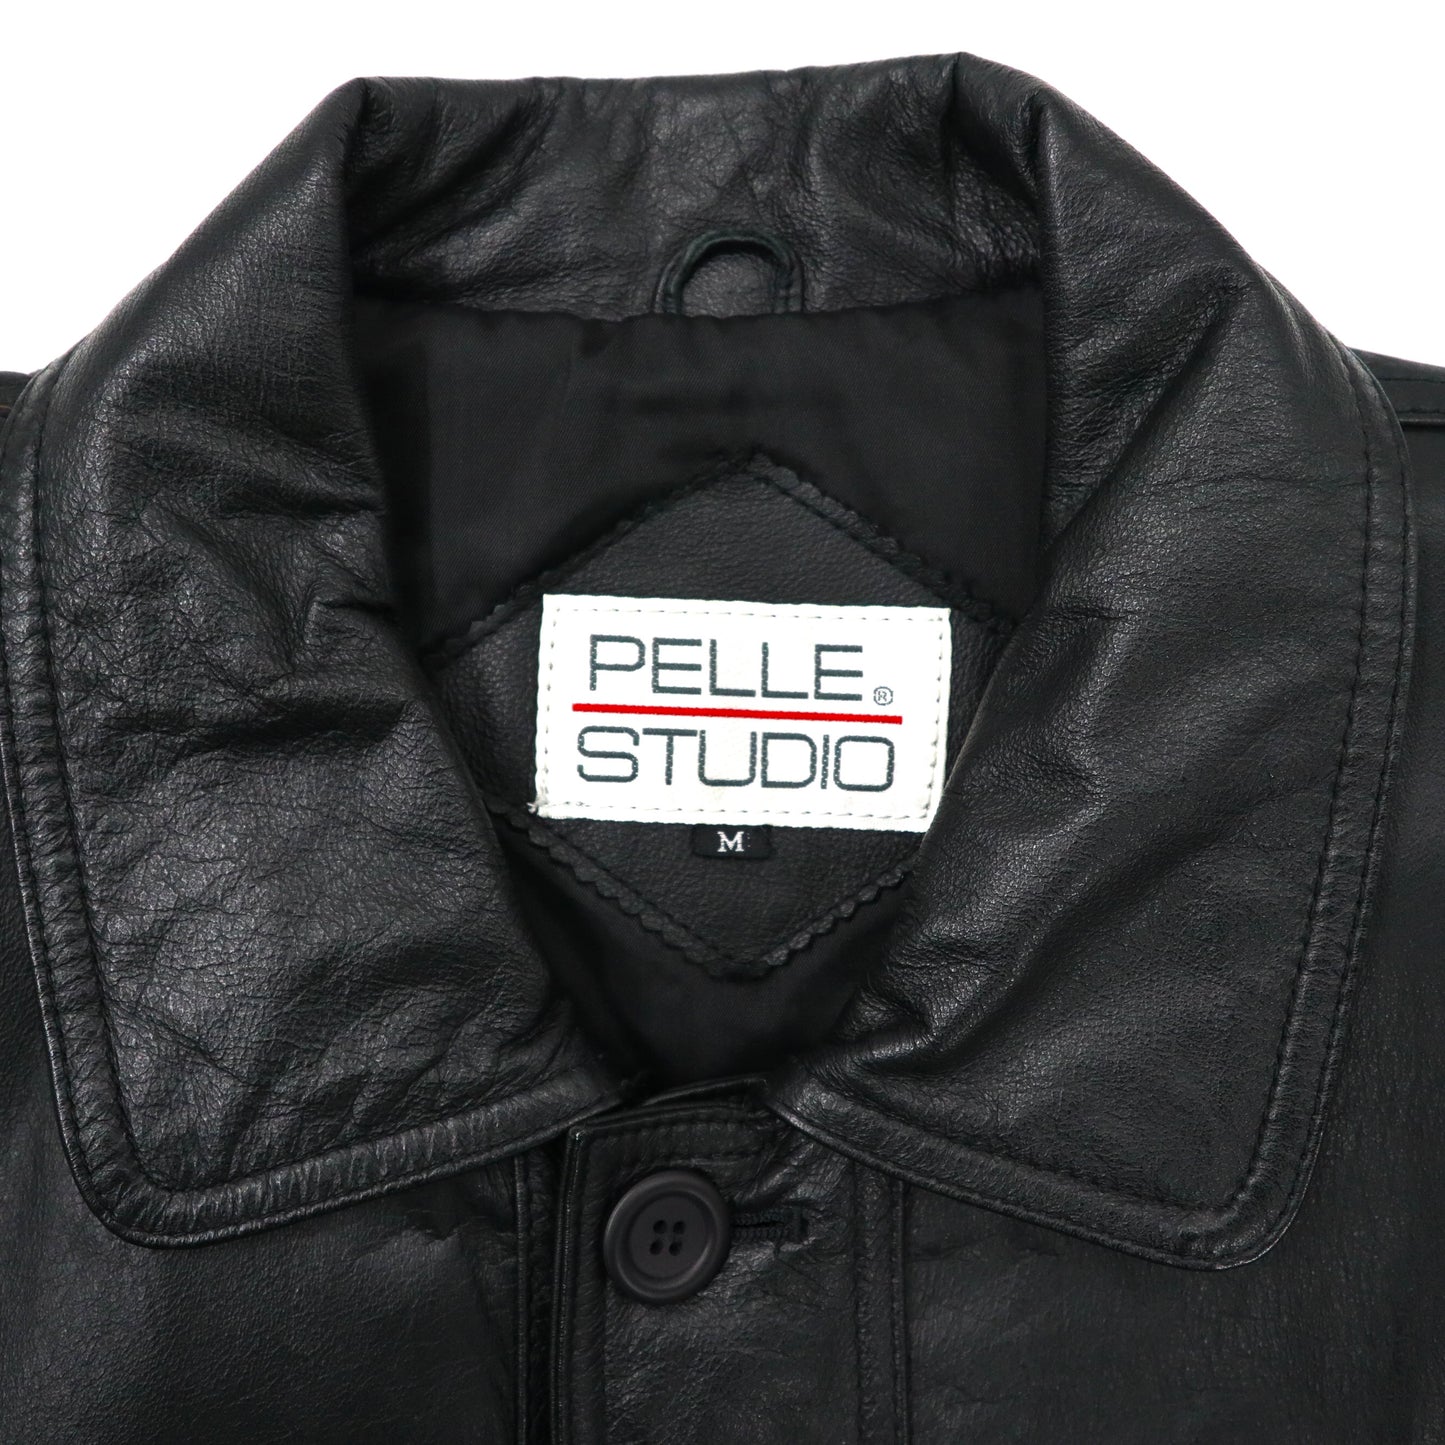 PELLE STUDIO ( WILSONS ) レザーコート M ブラック 牛革 カウレザー ビッグサイズ 90年代